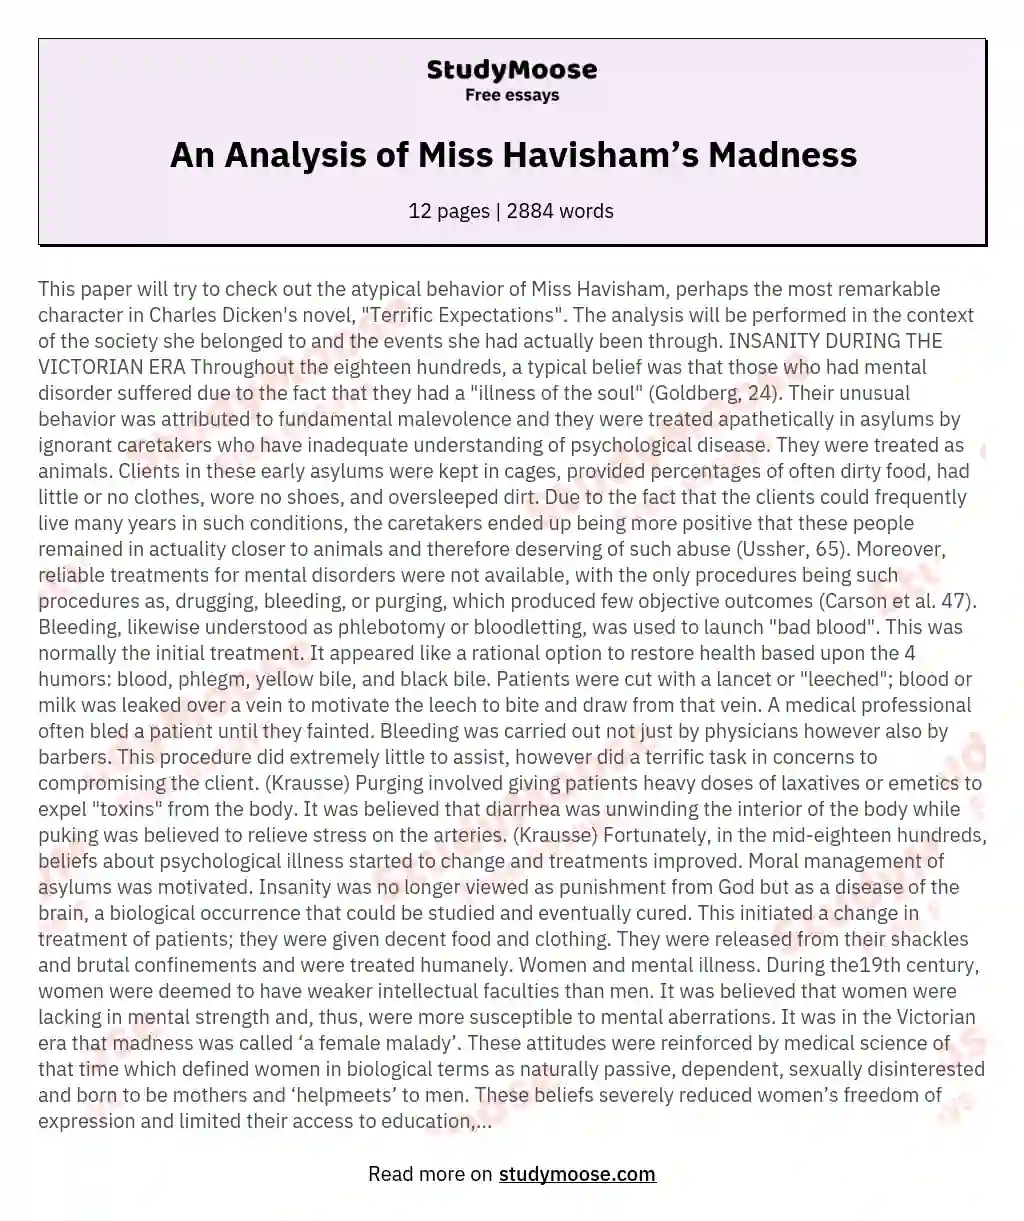 An Analysis of Miss Havisham’s Madness essay